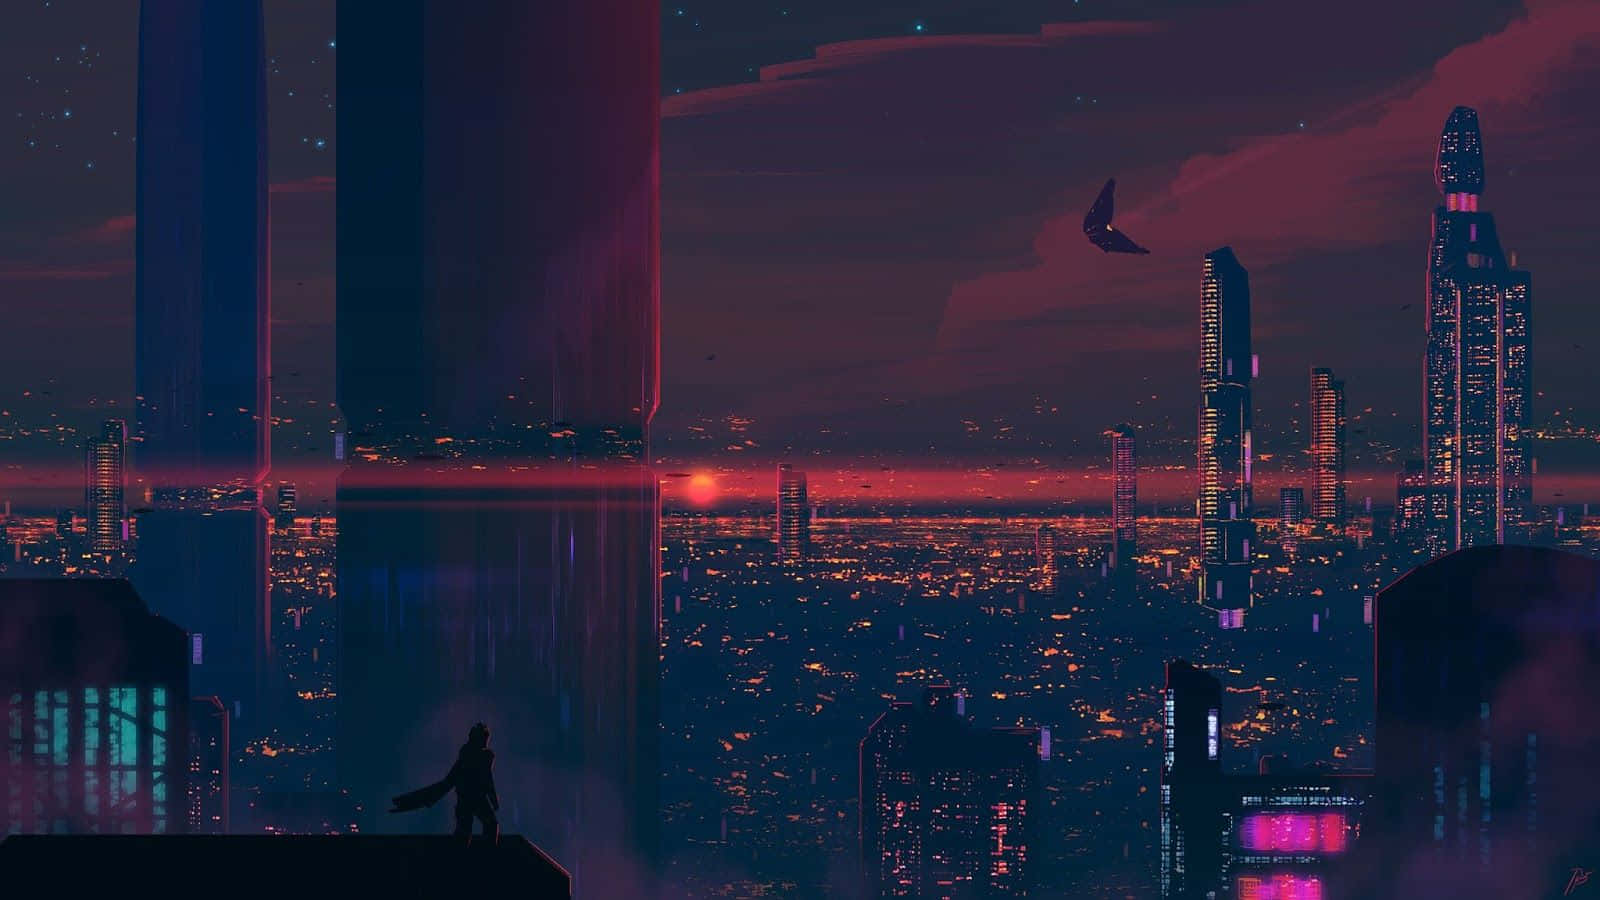 Image Cyberpunk Pixel Art Background